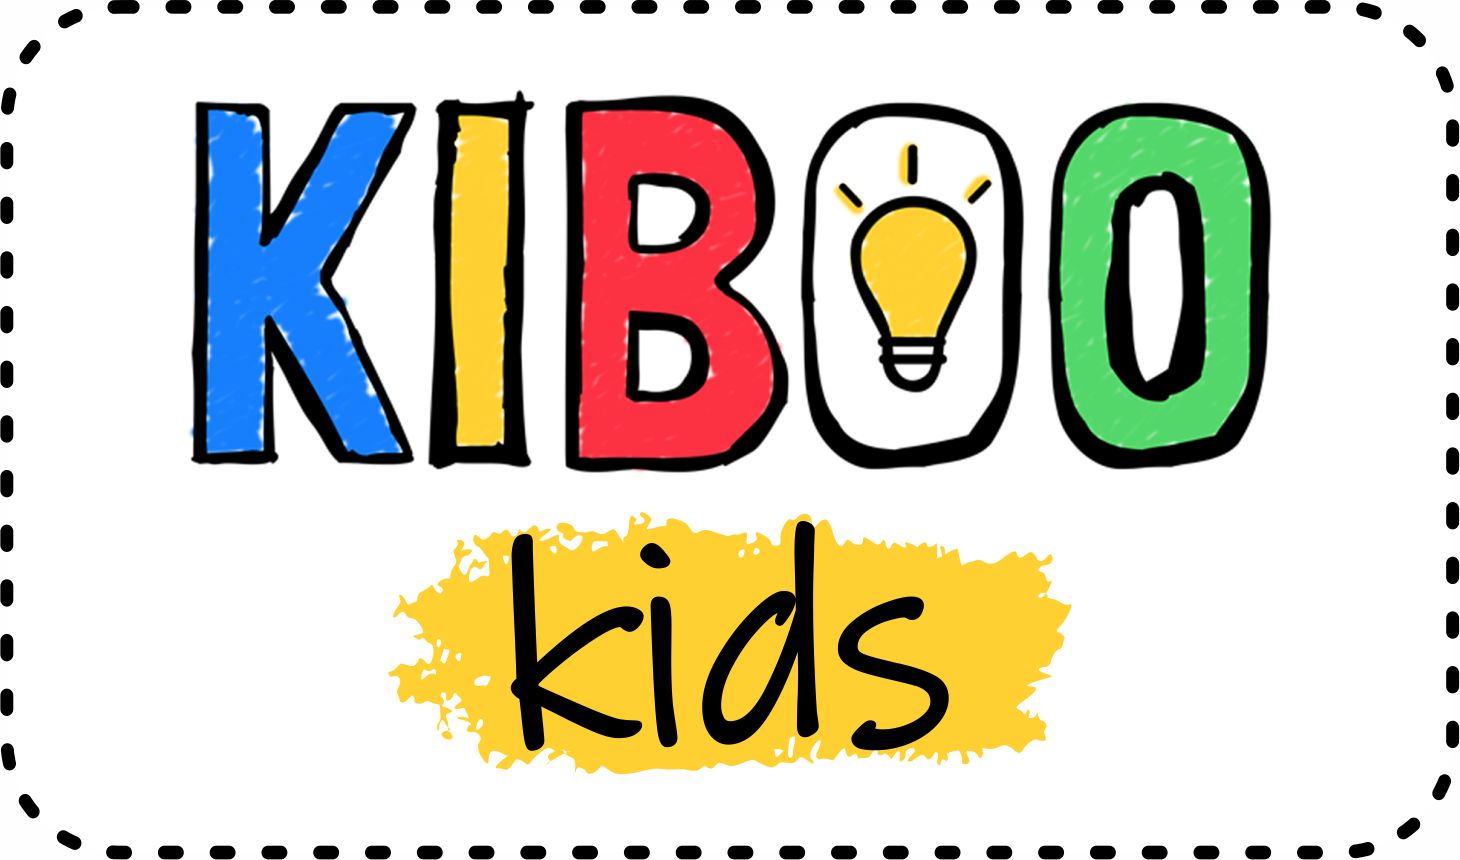 Kiboo Kids